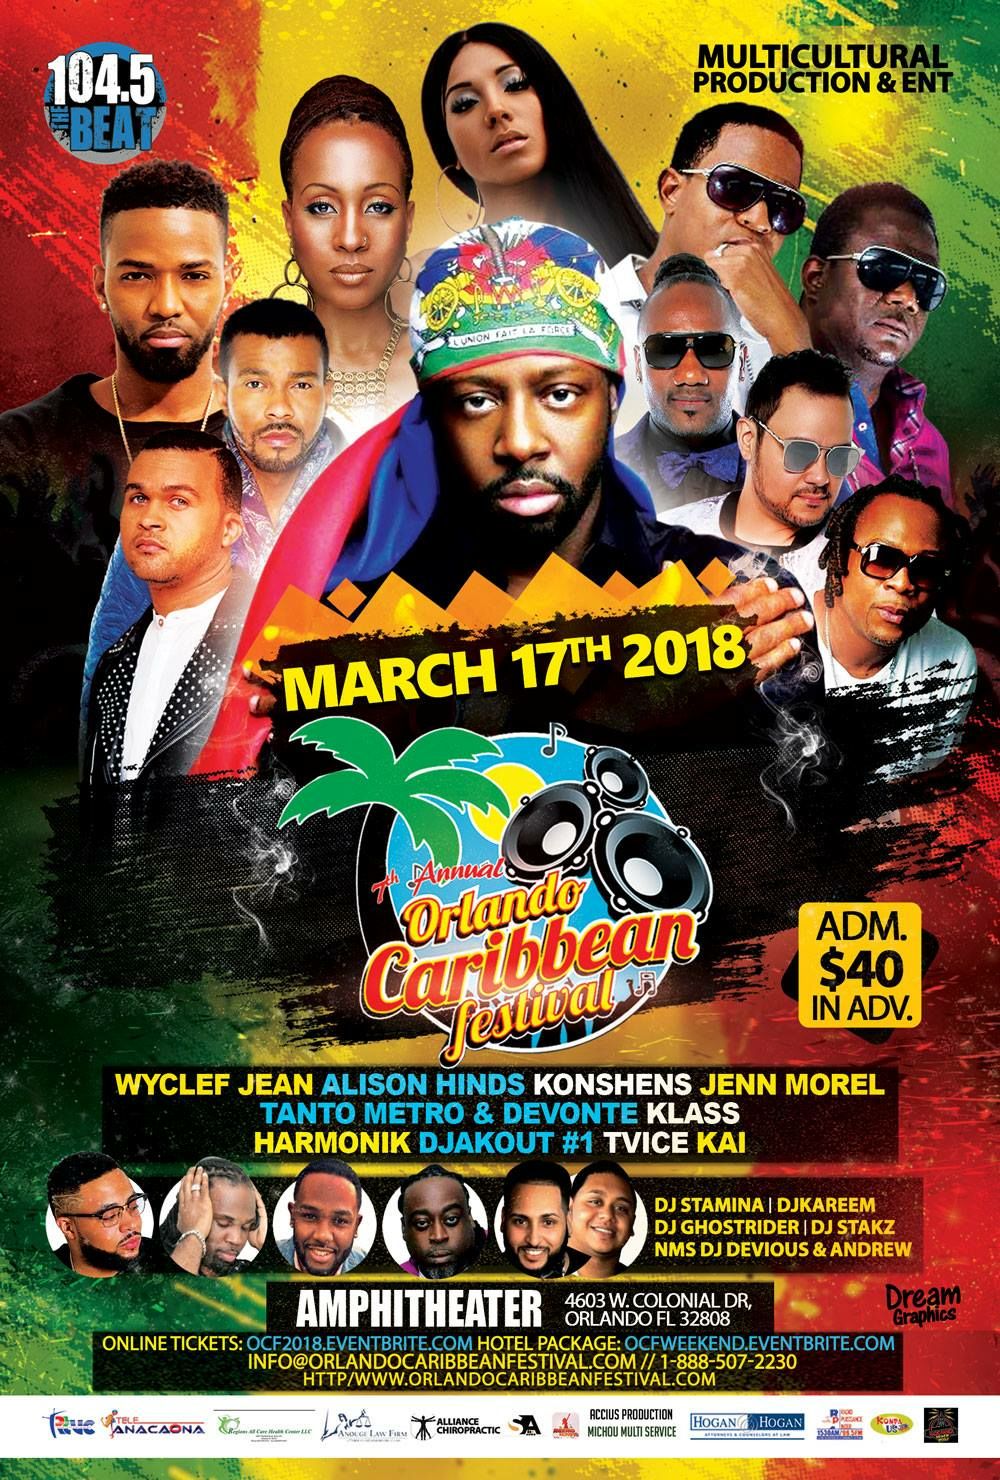 Orlando Caribbean Festival